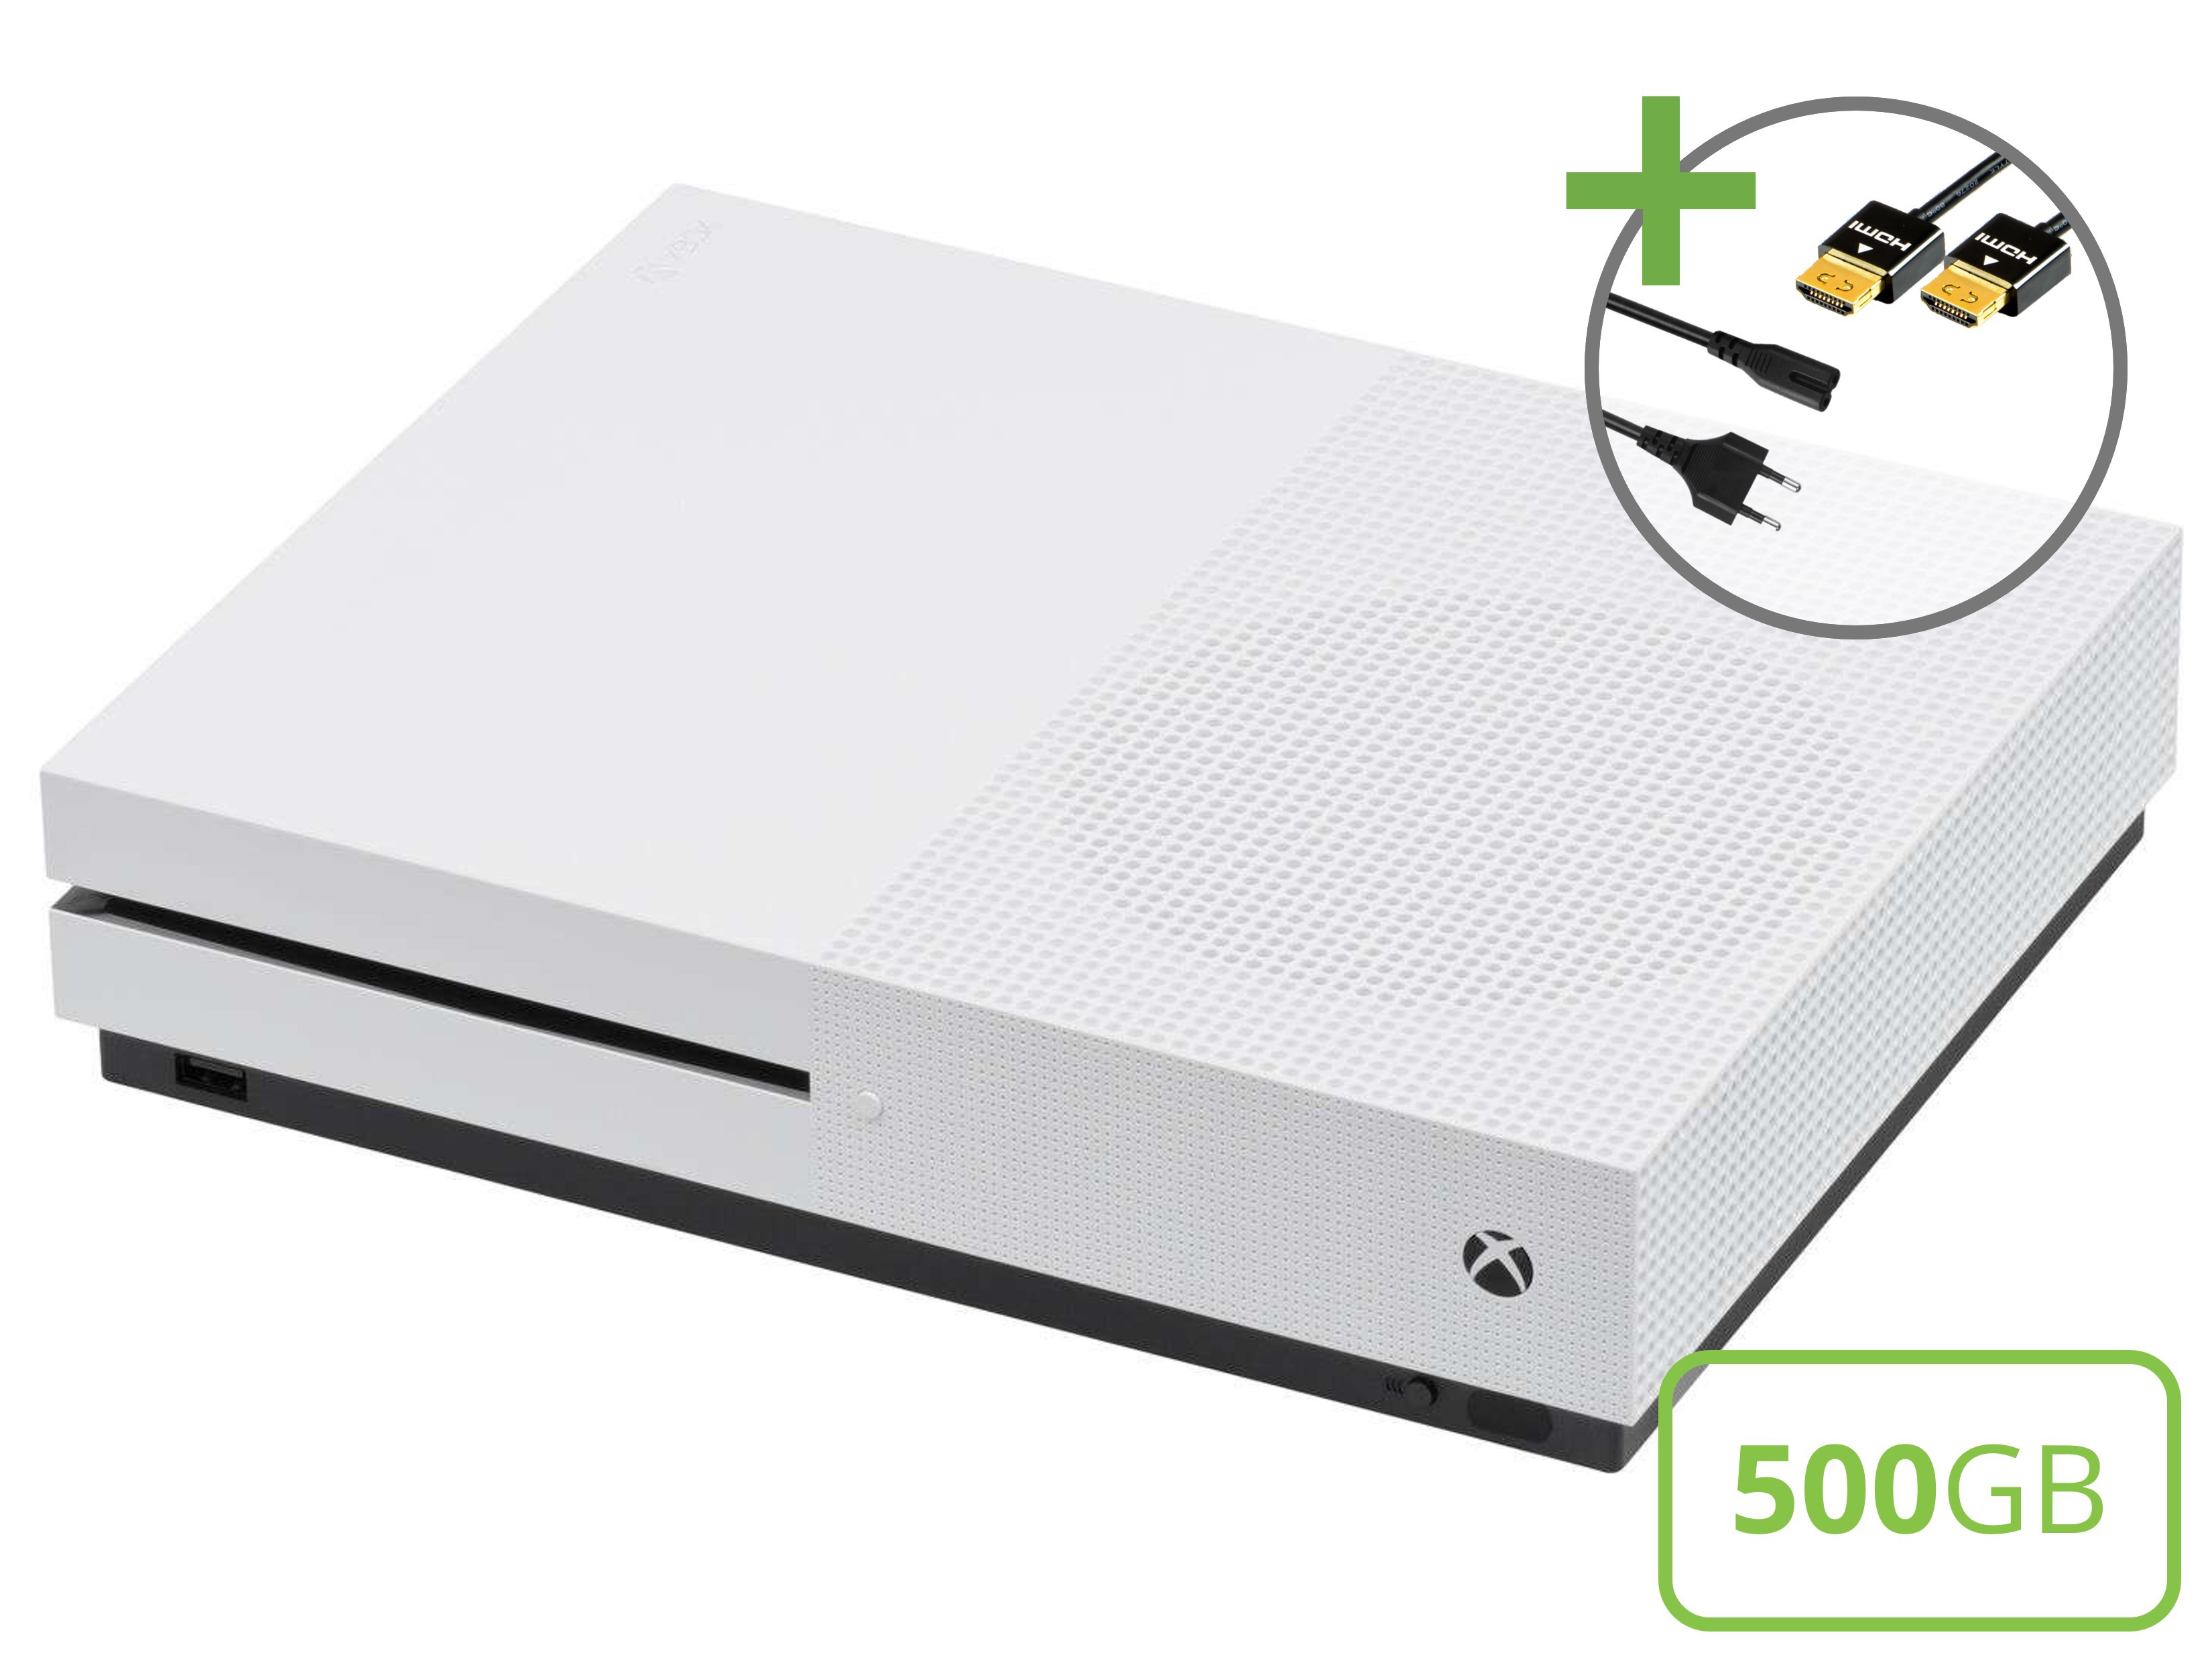 Microsoft Xbox One S Starter Pack - 500GB Starter Bundle Edition - Xbox One Hardware - 2